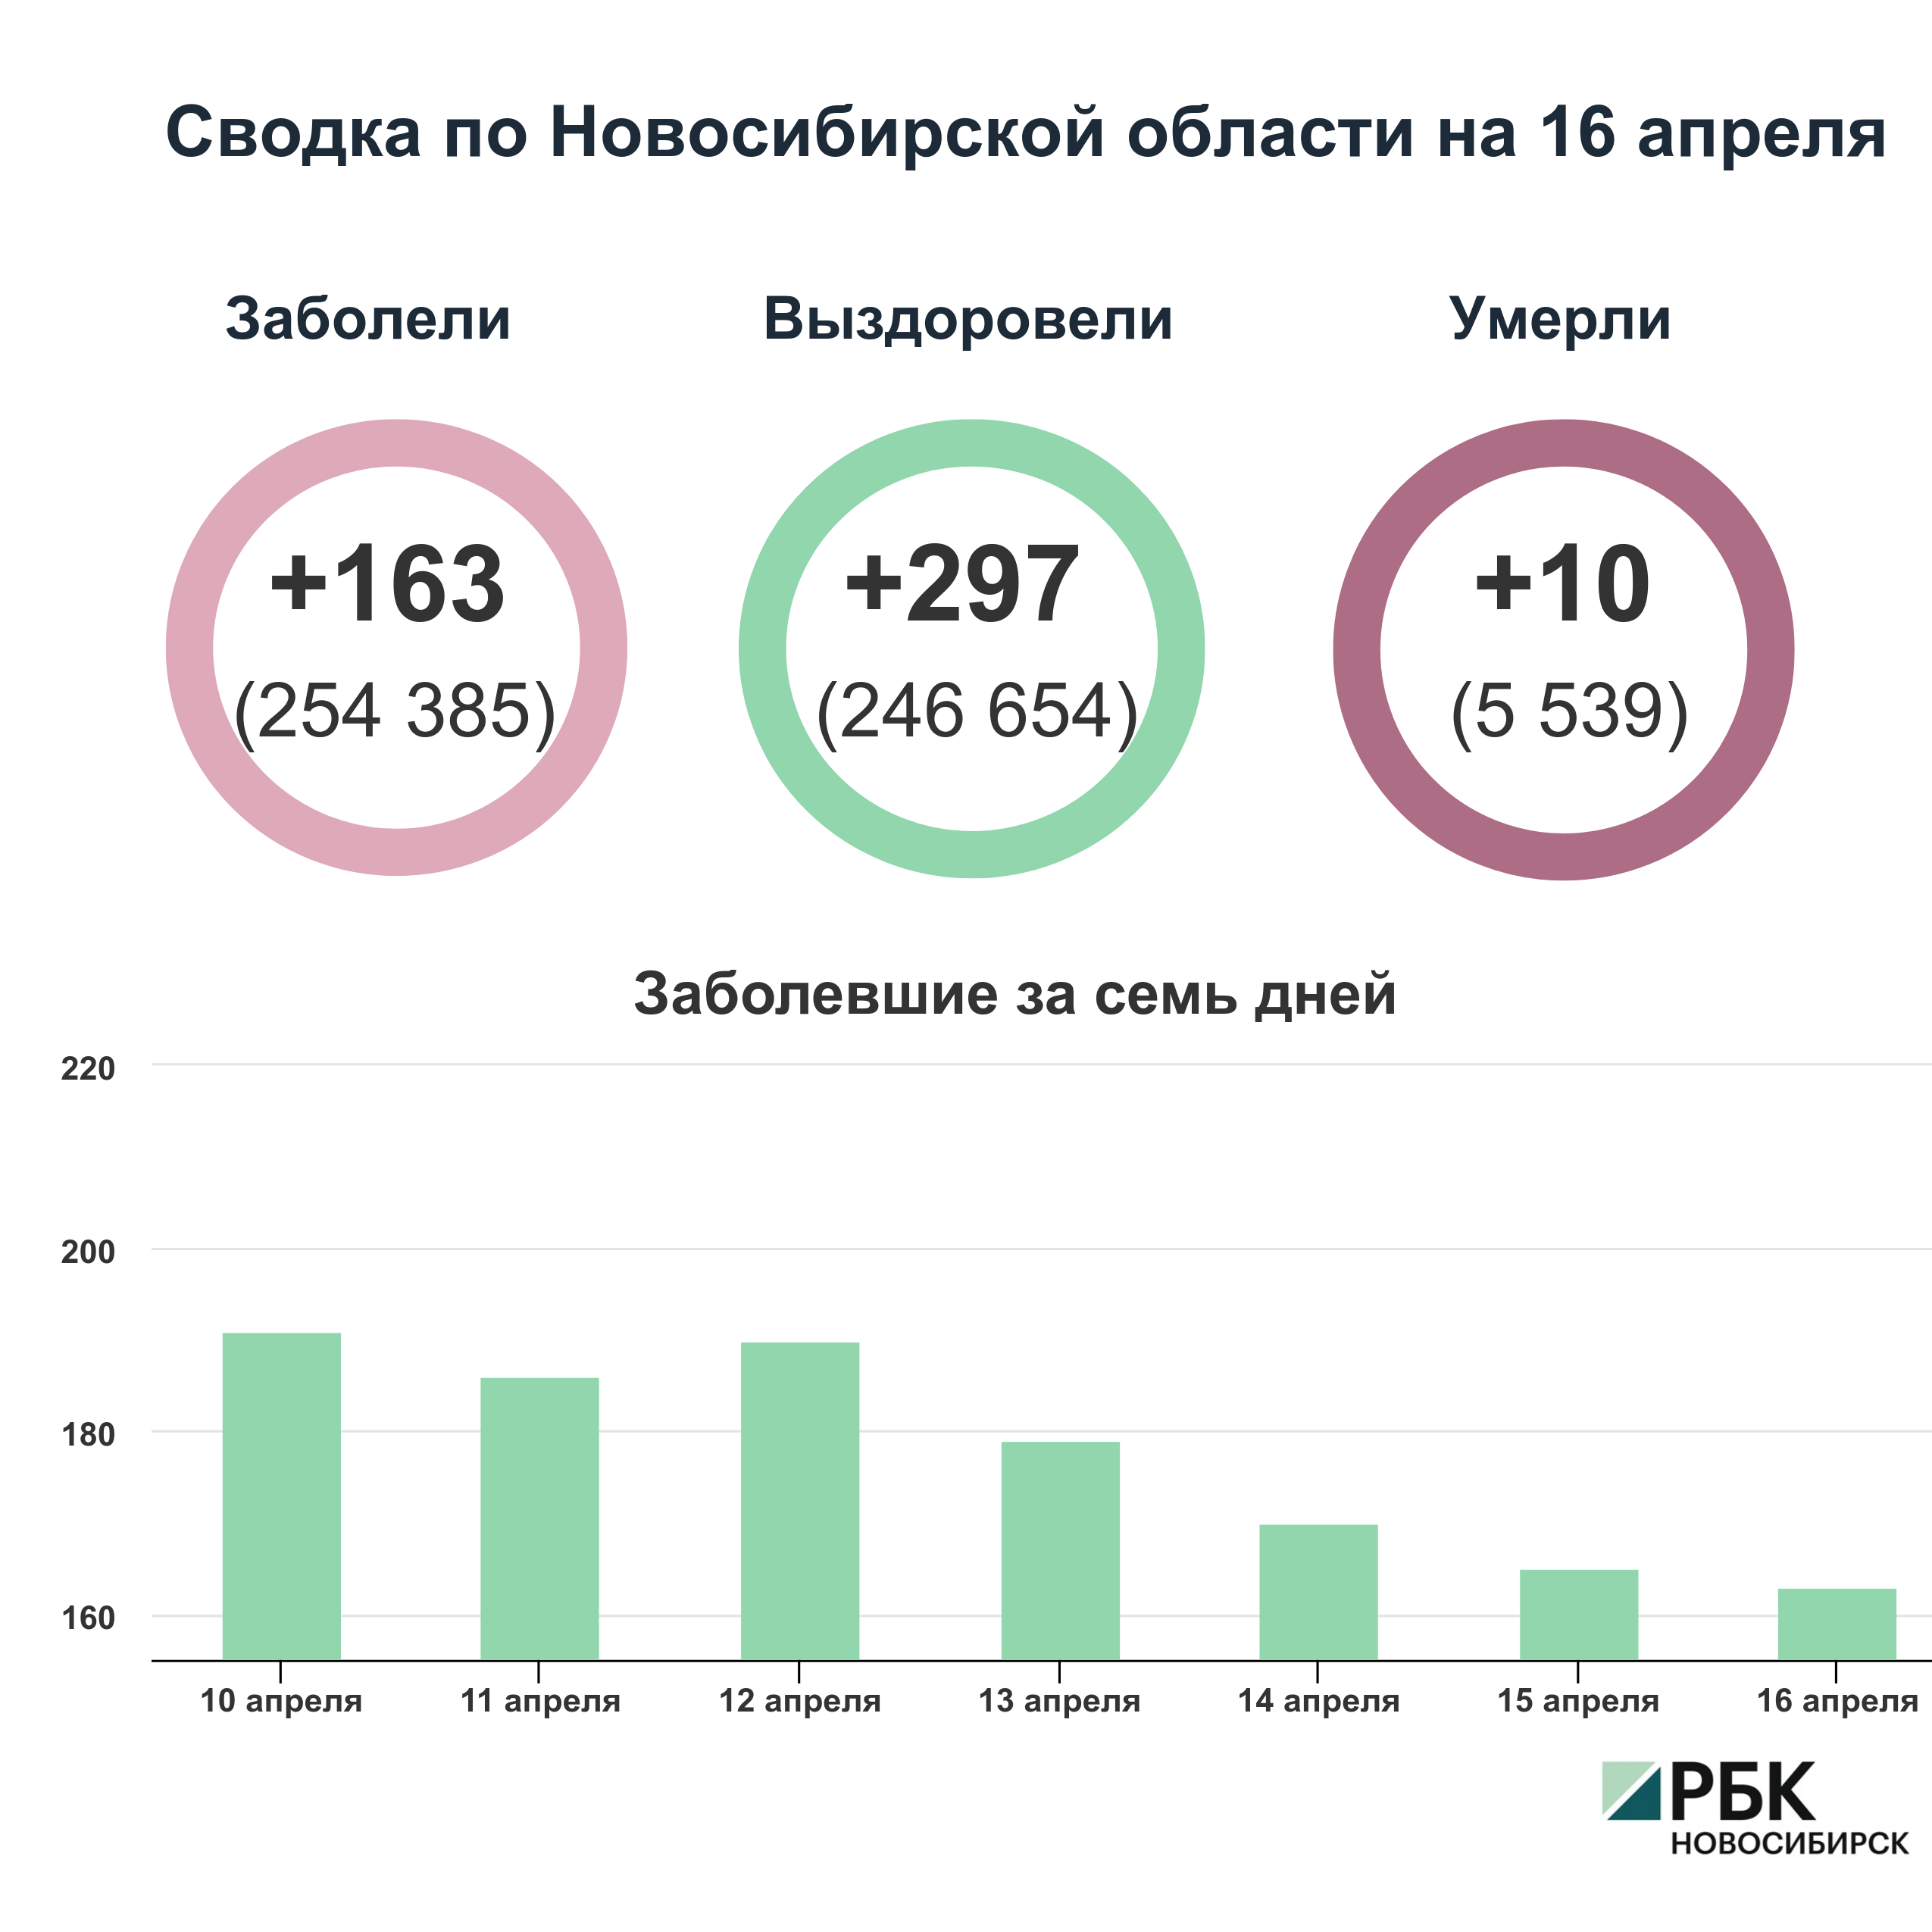 Коронавирус в Новосибирске: сводка на 16 апреля